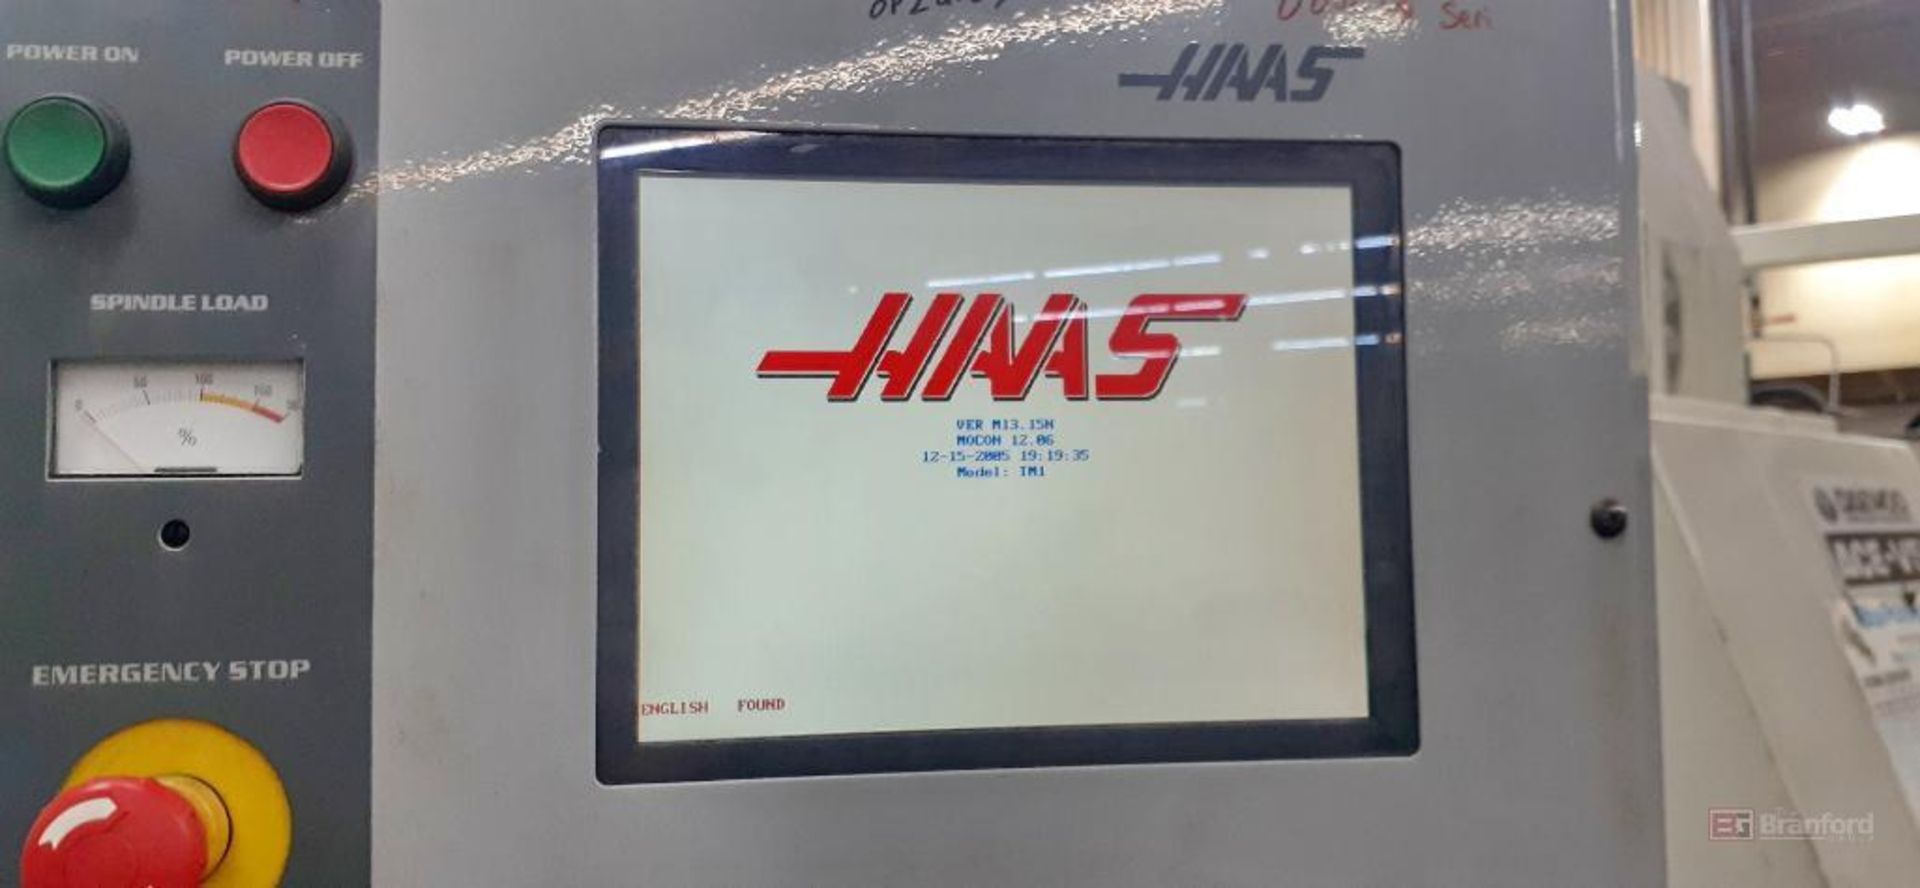 Haas Model TM-1, CNC Vertical Machining Center - Image 11 of 12